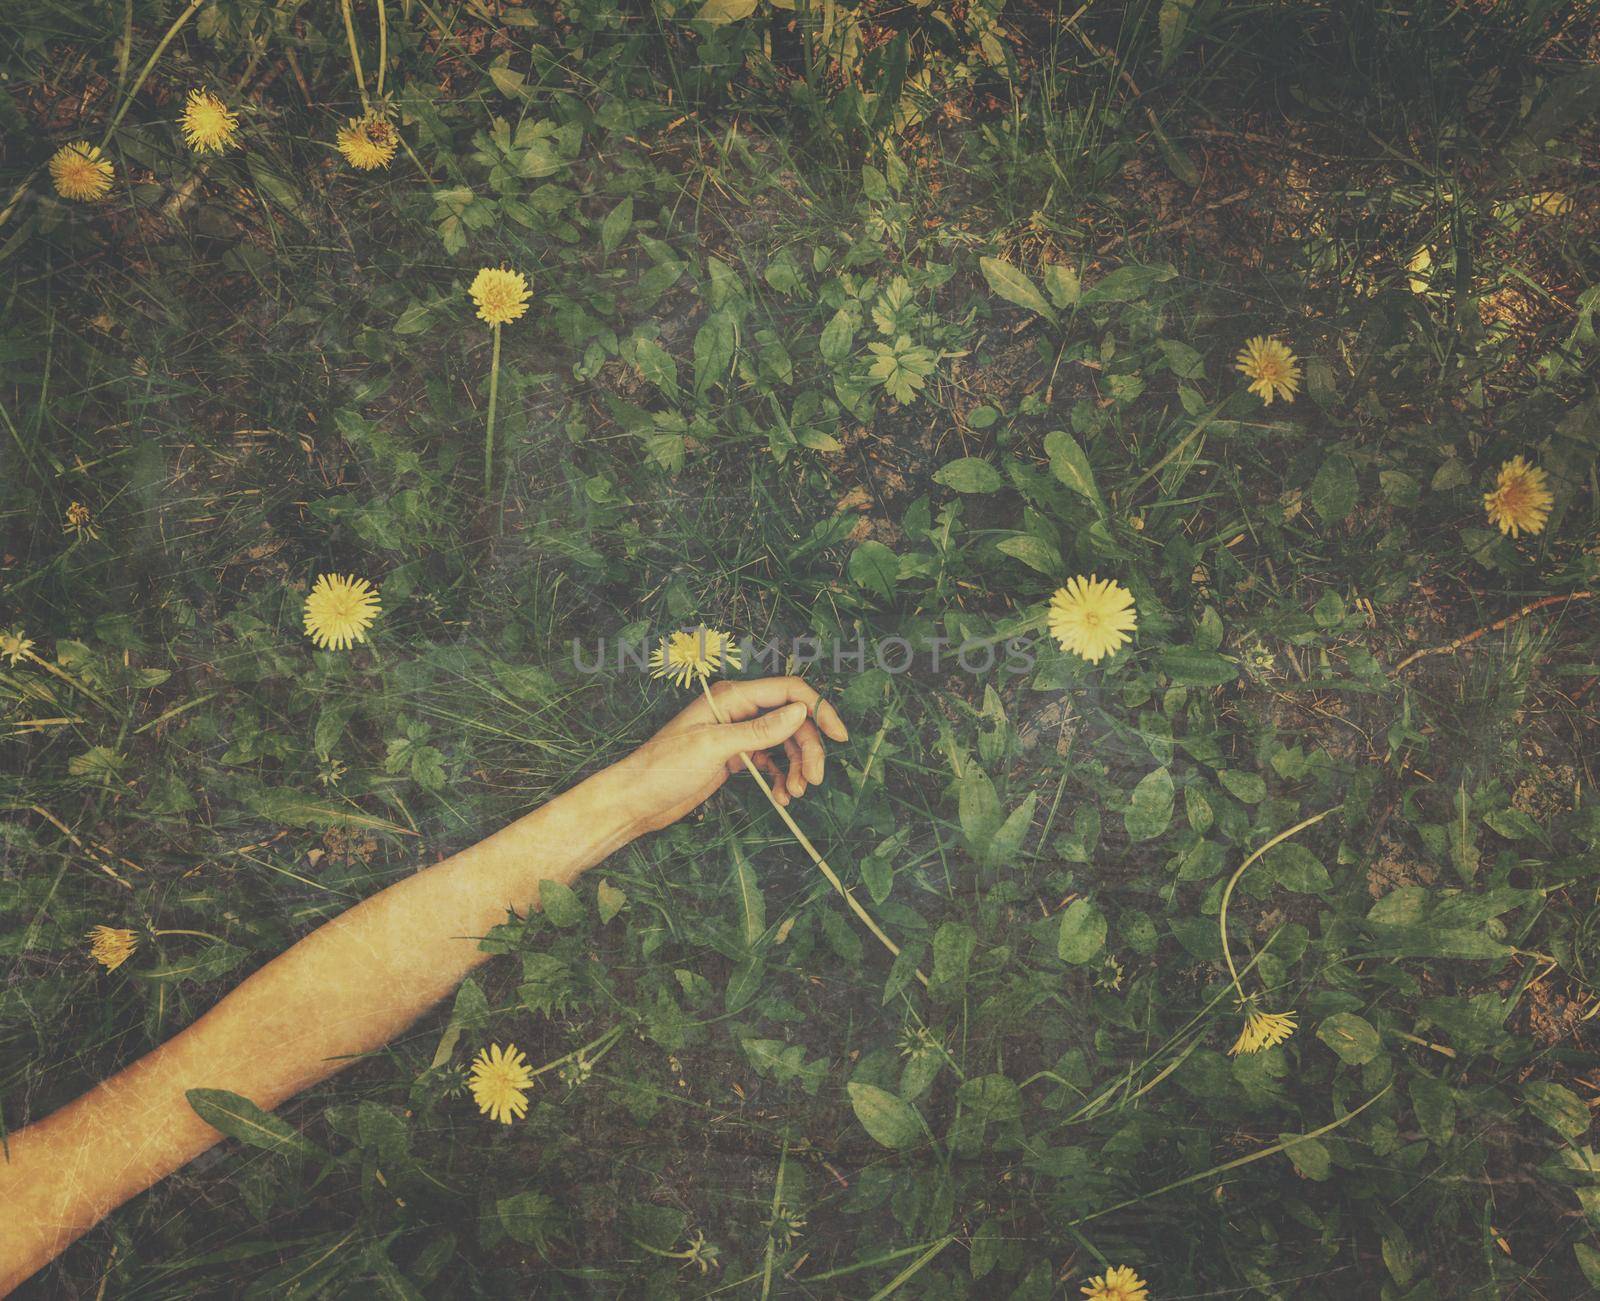 Hand with yellow dandelion by alexAleksei